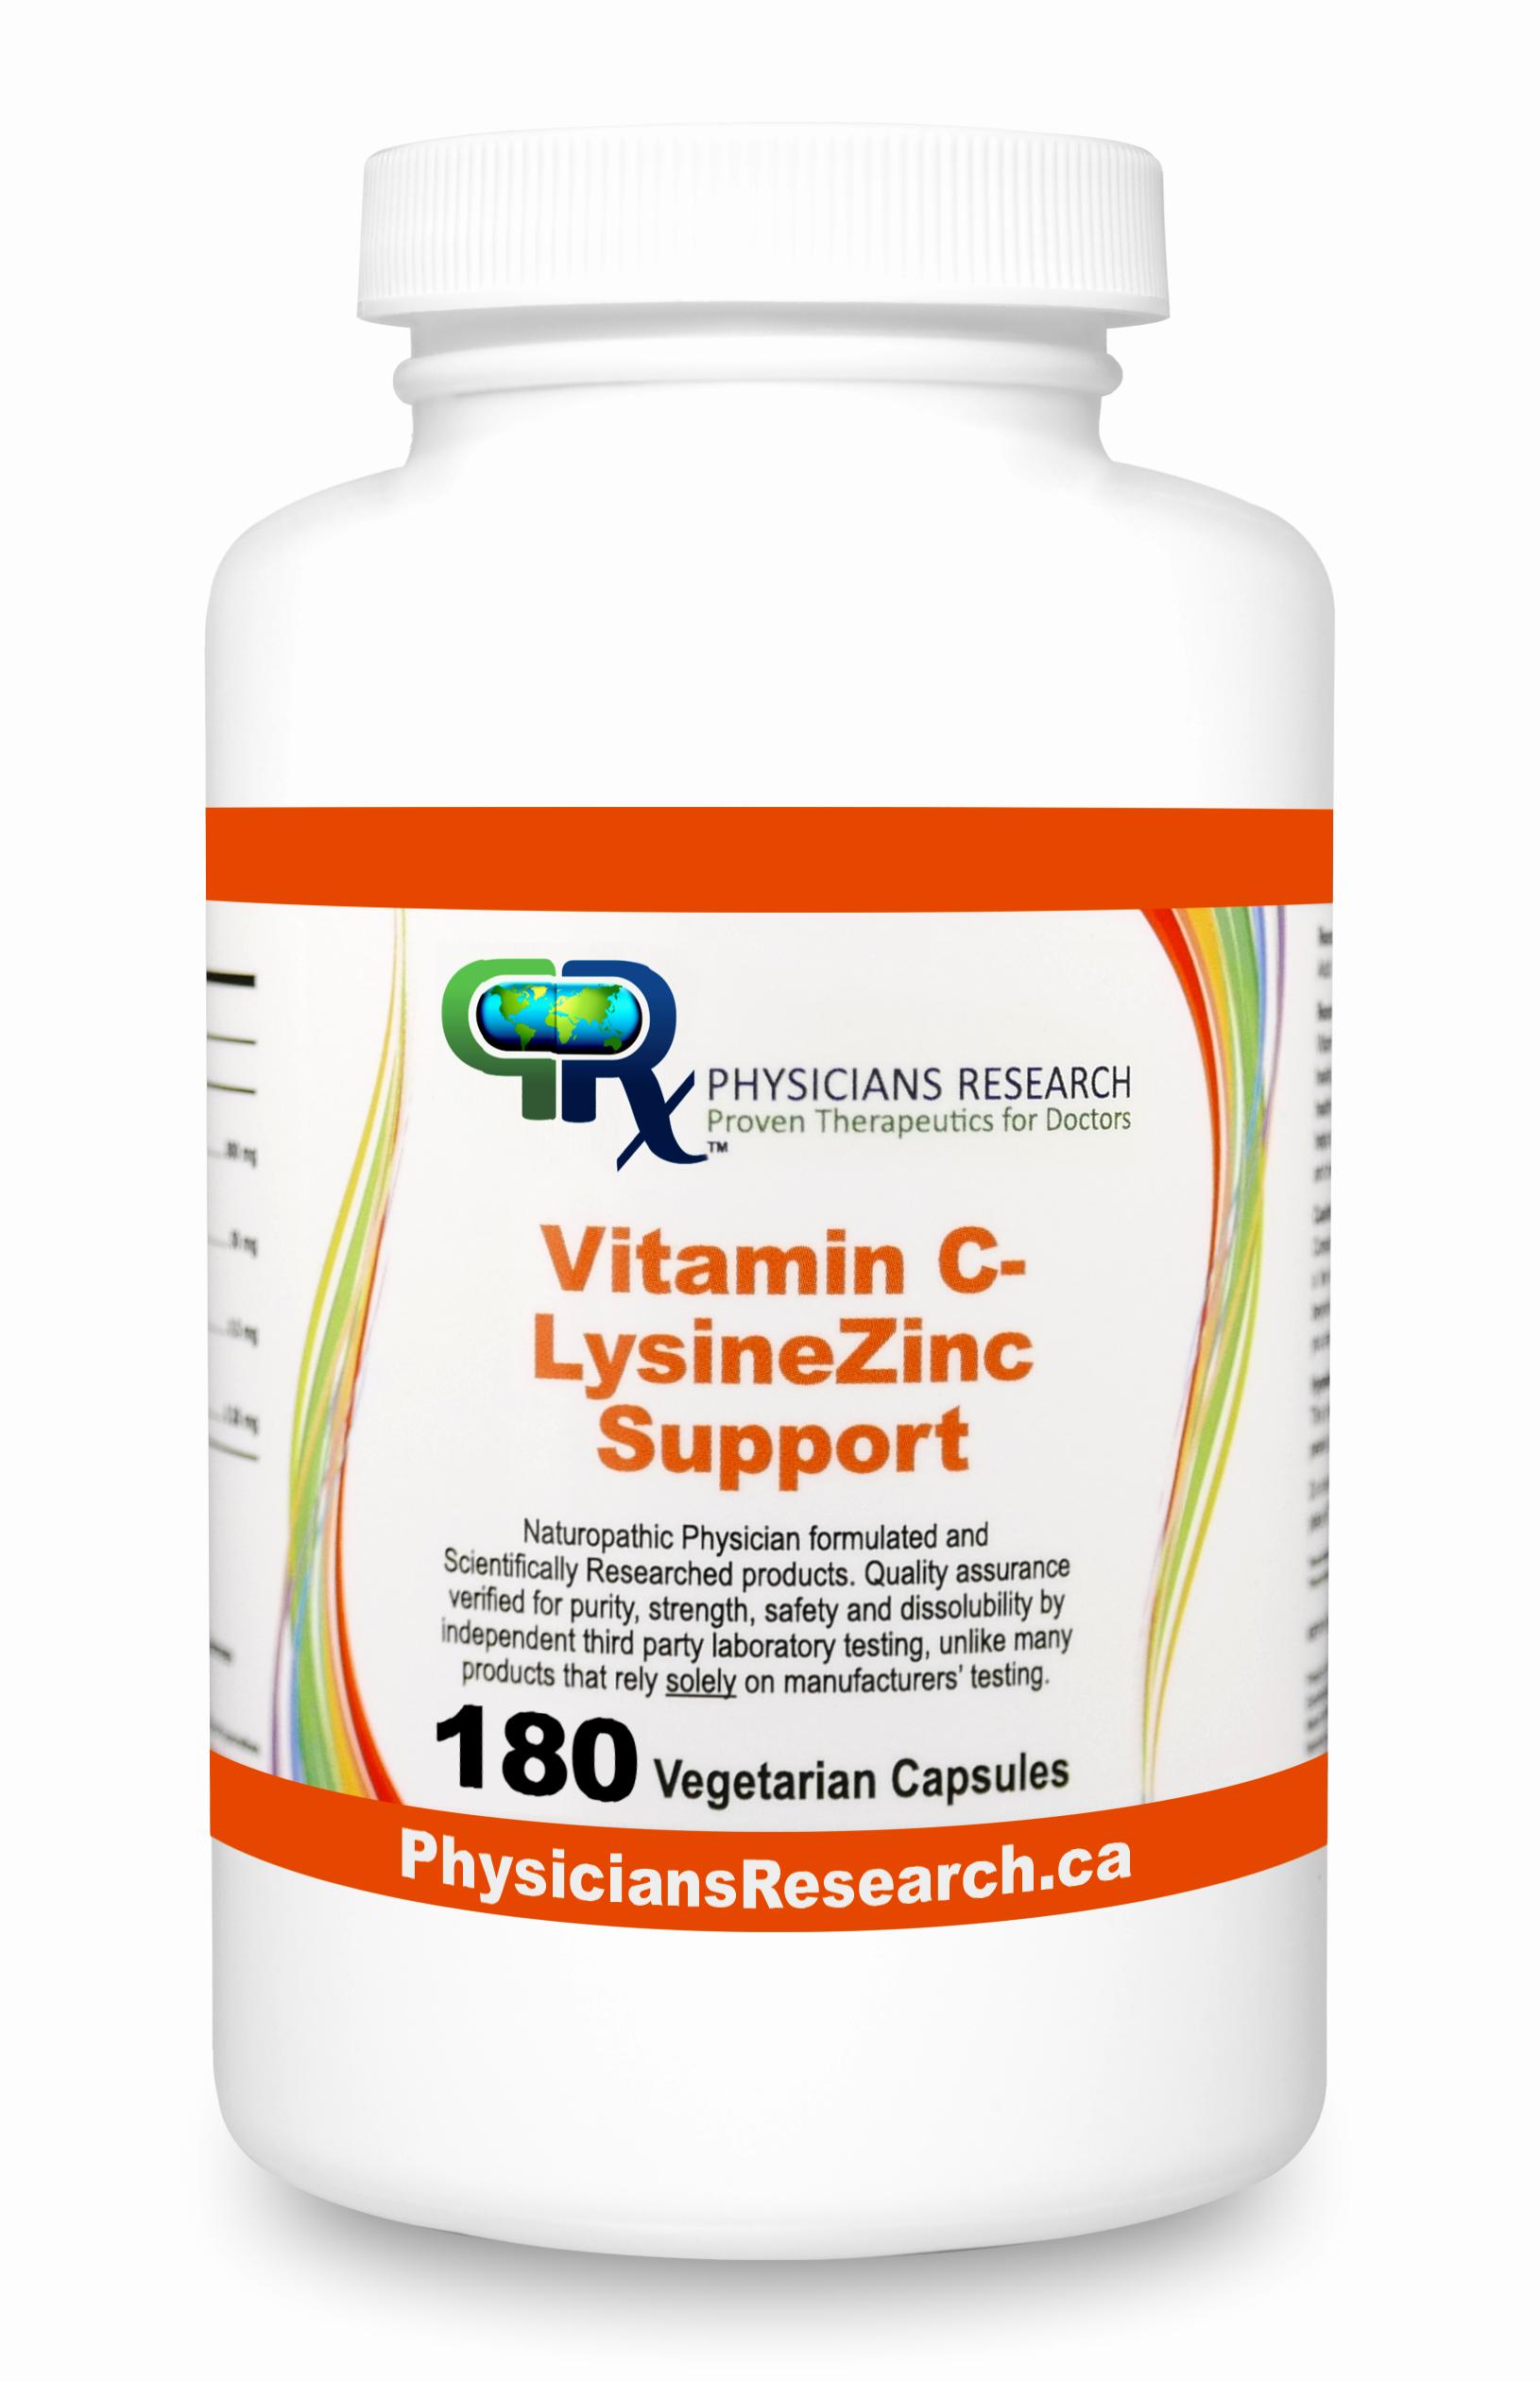 A bottle of Vitamin C-Lysine-Zinc Support, a naturopathic supplement.